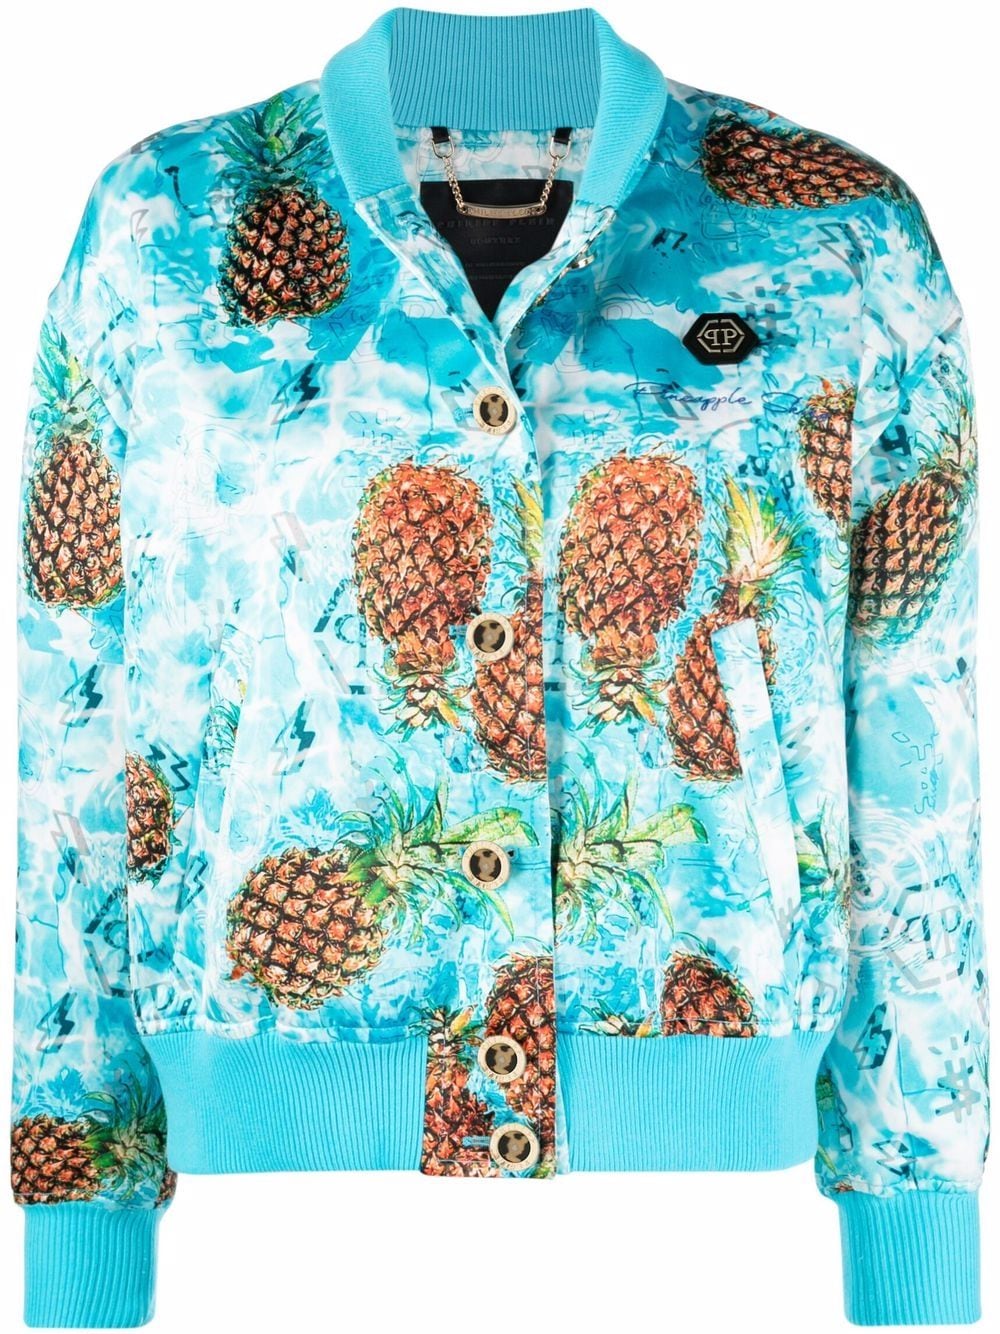 Pineapple Skies bomber jacket